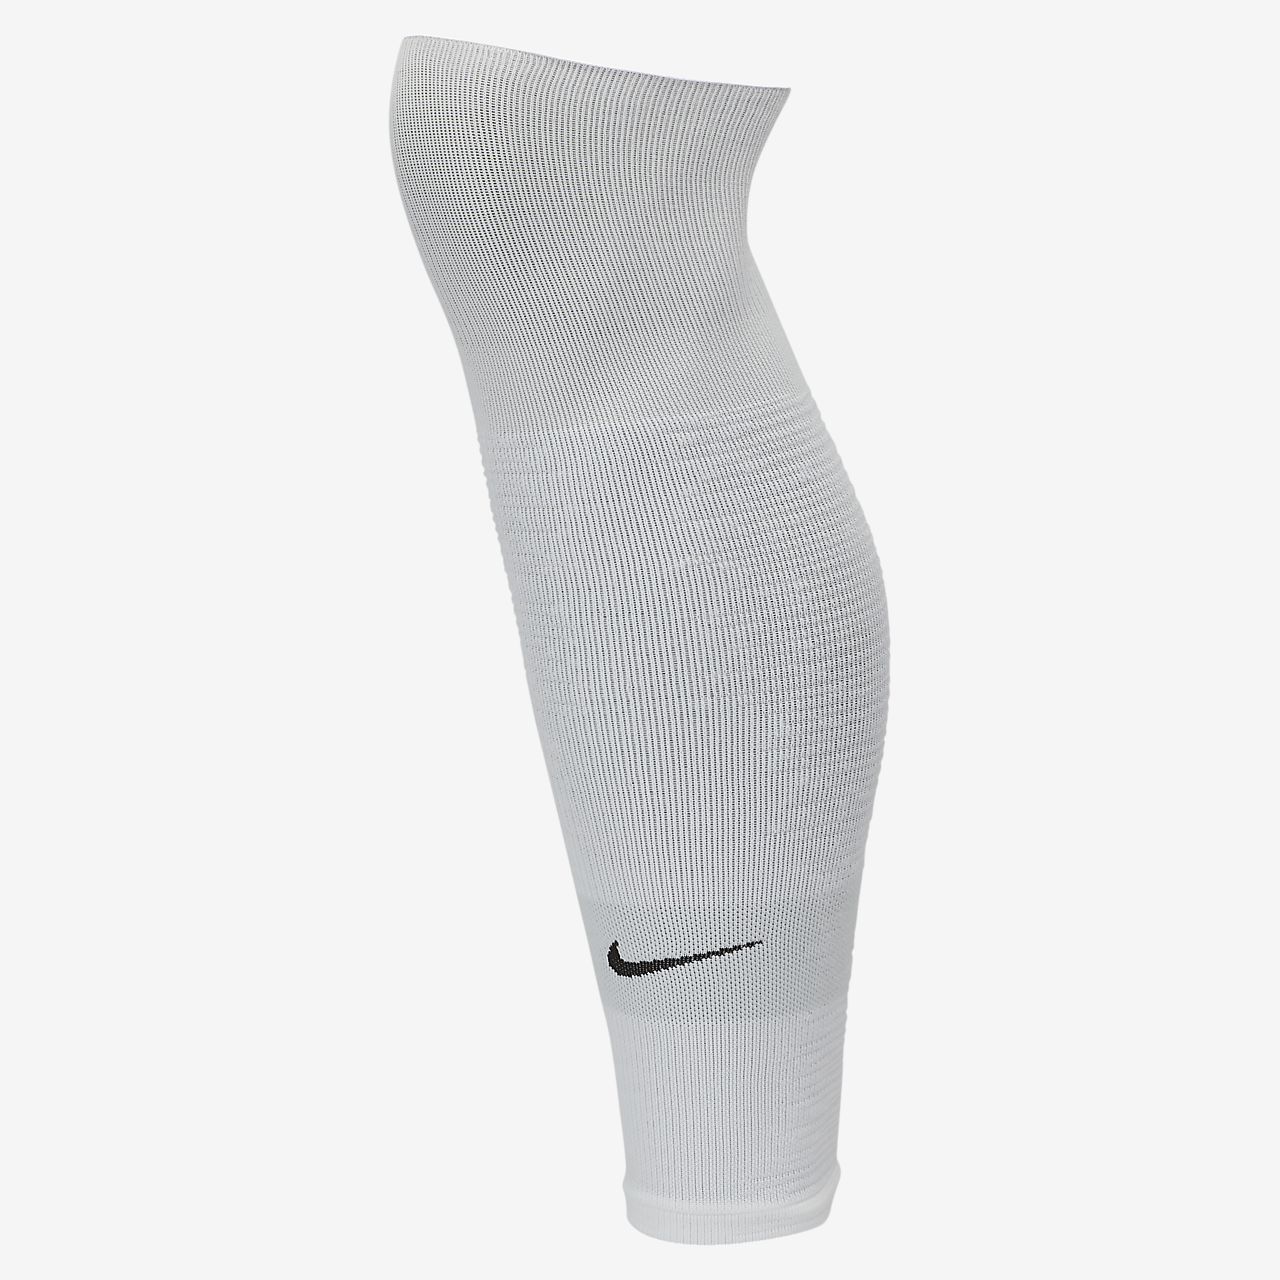 nike compression calf sleeve